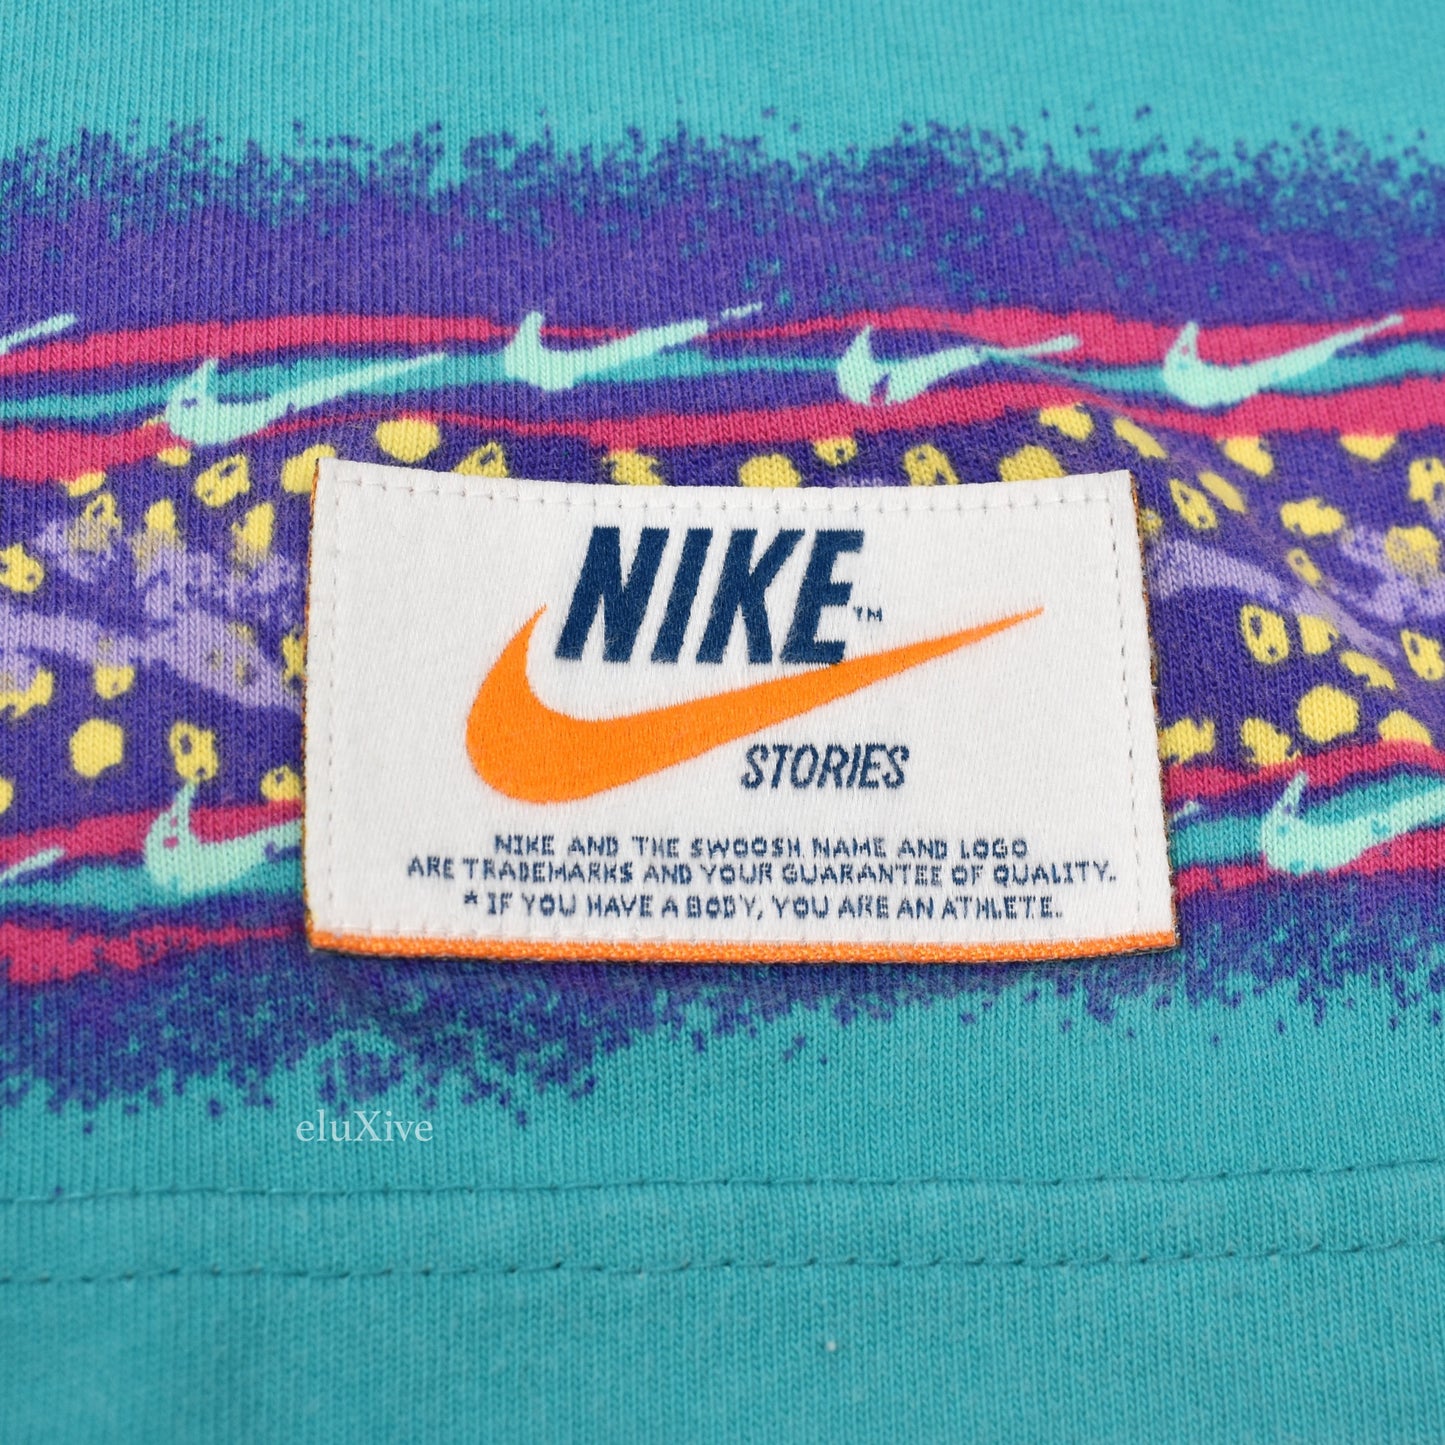 Nike - Stories Retro 90s 'Dixie Cup' Print T-Shirt